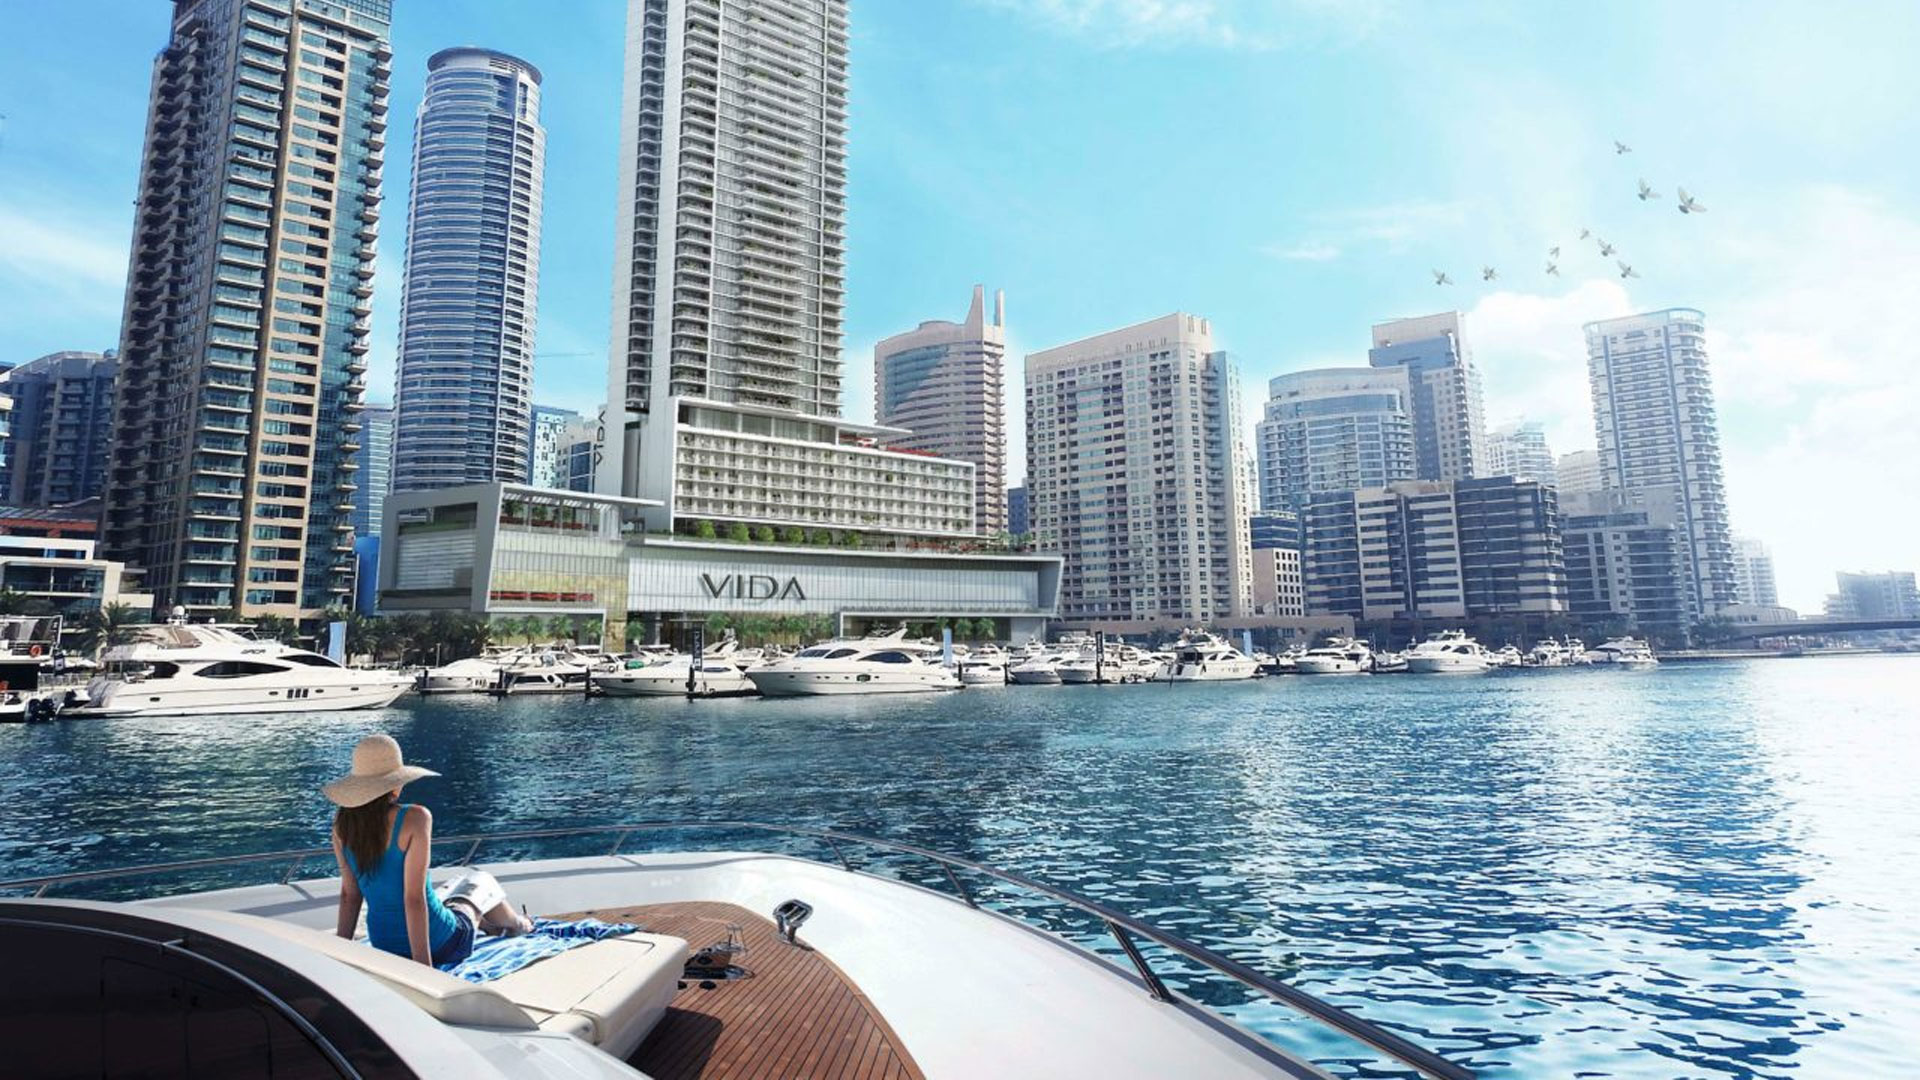 VIDA RESIDENCES DUBAI MARINA by Emaar Properties in Dubai Marina, Dubai, UAE - 4